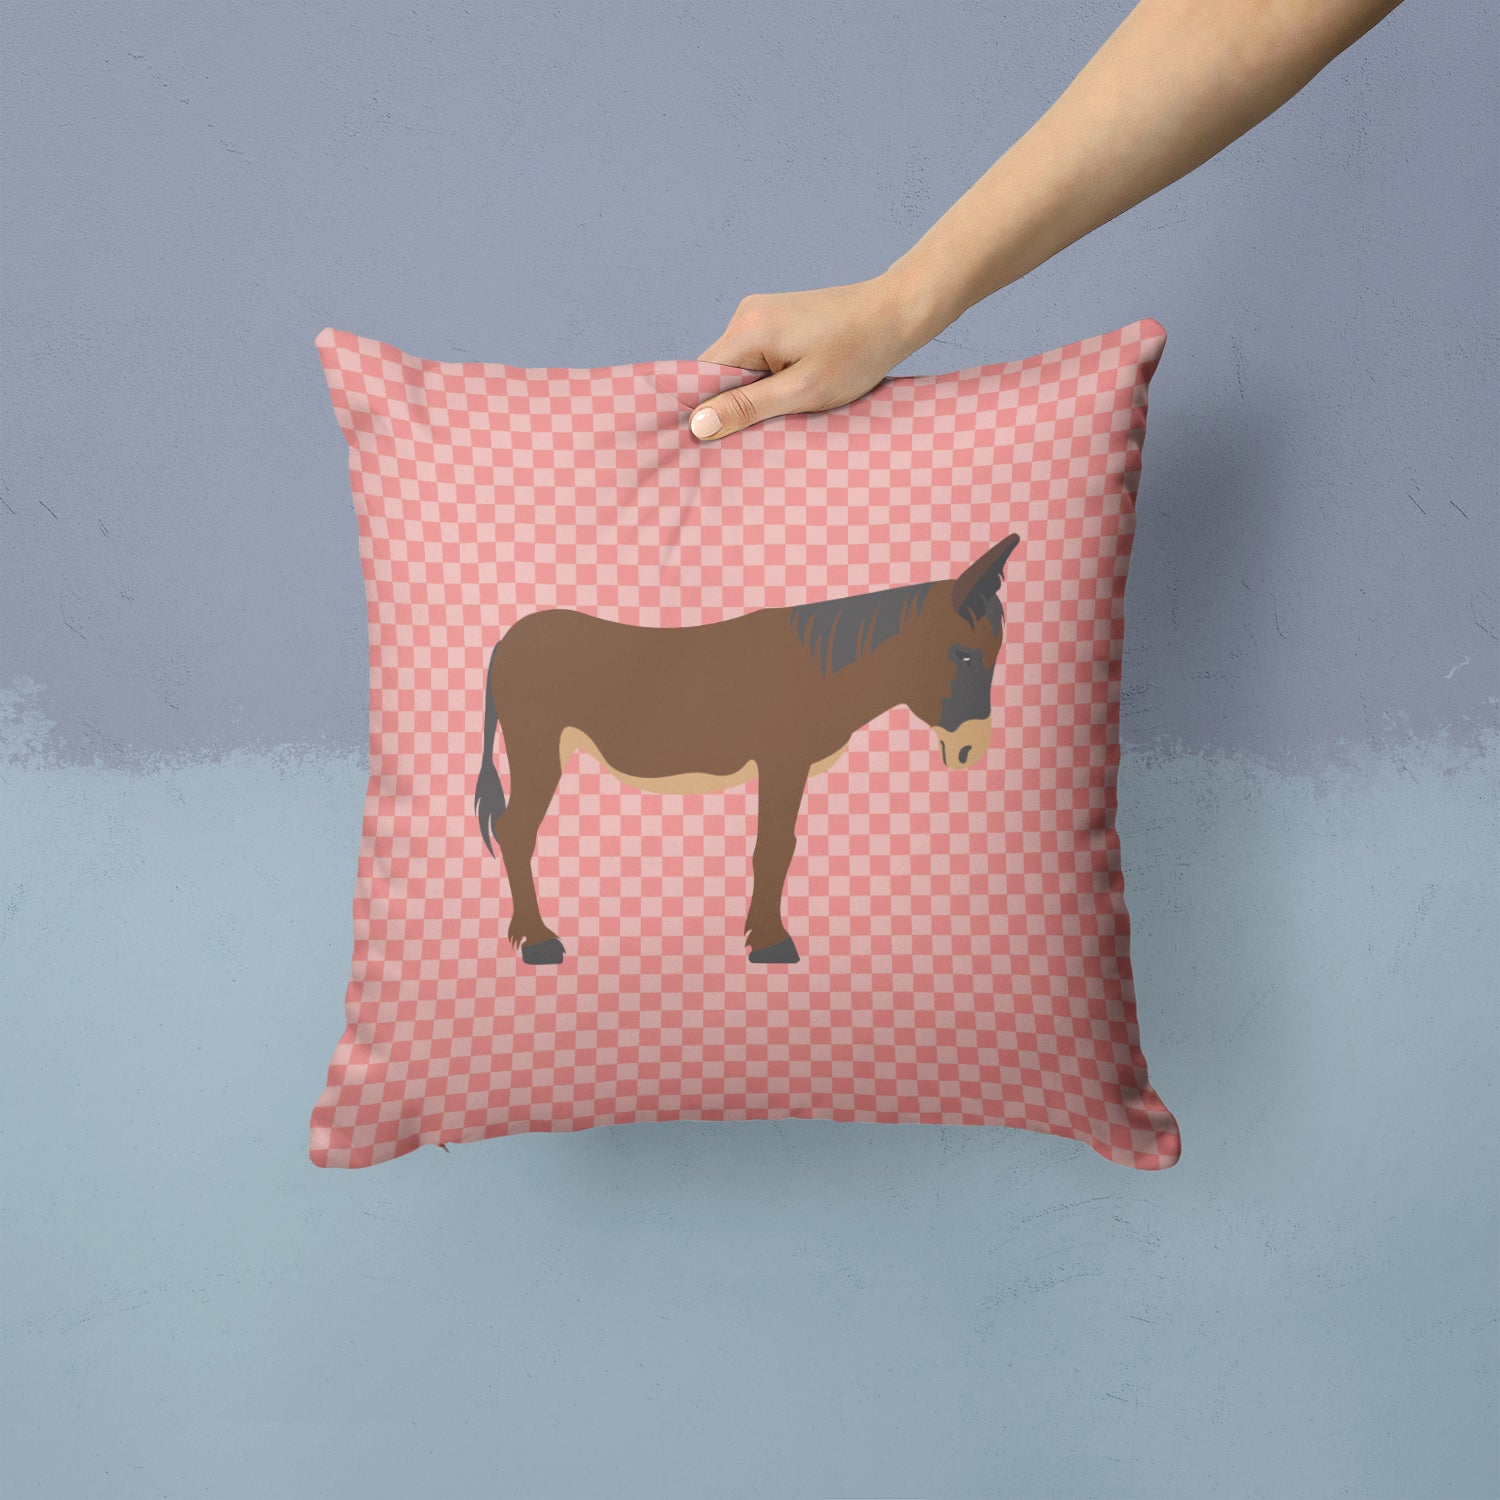 Zamorano-Leones Donkey Pink Check Fabric Decorative Pillow BB7853PW1414 - the-store.com